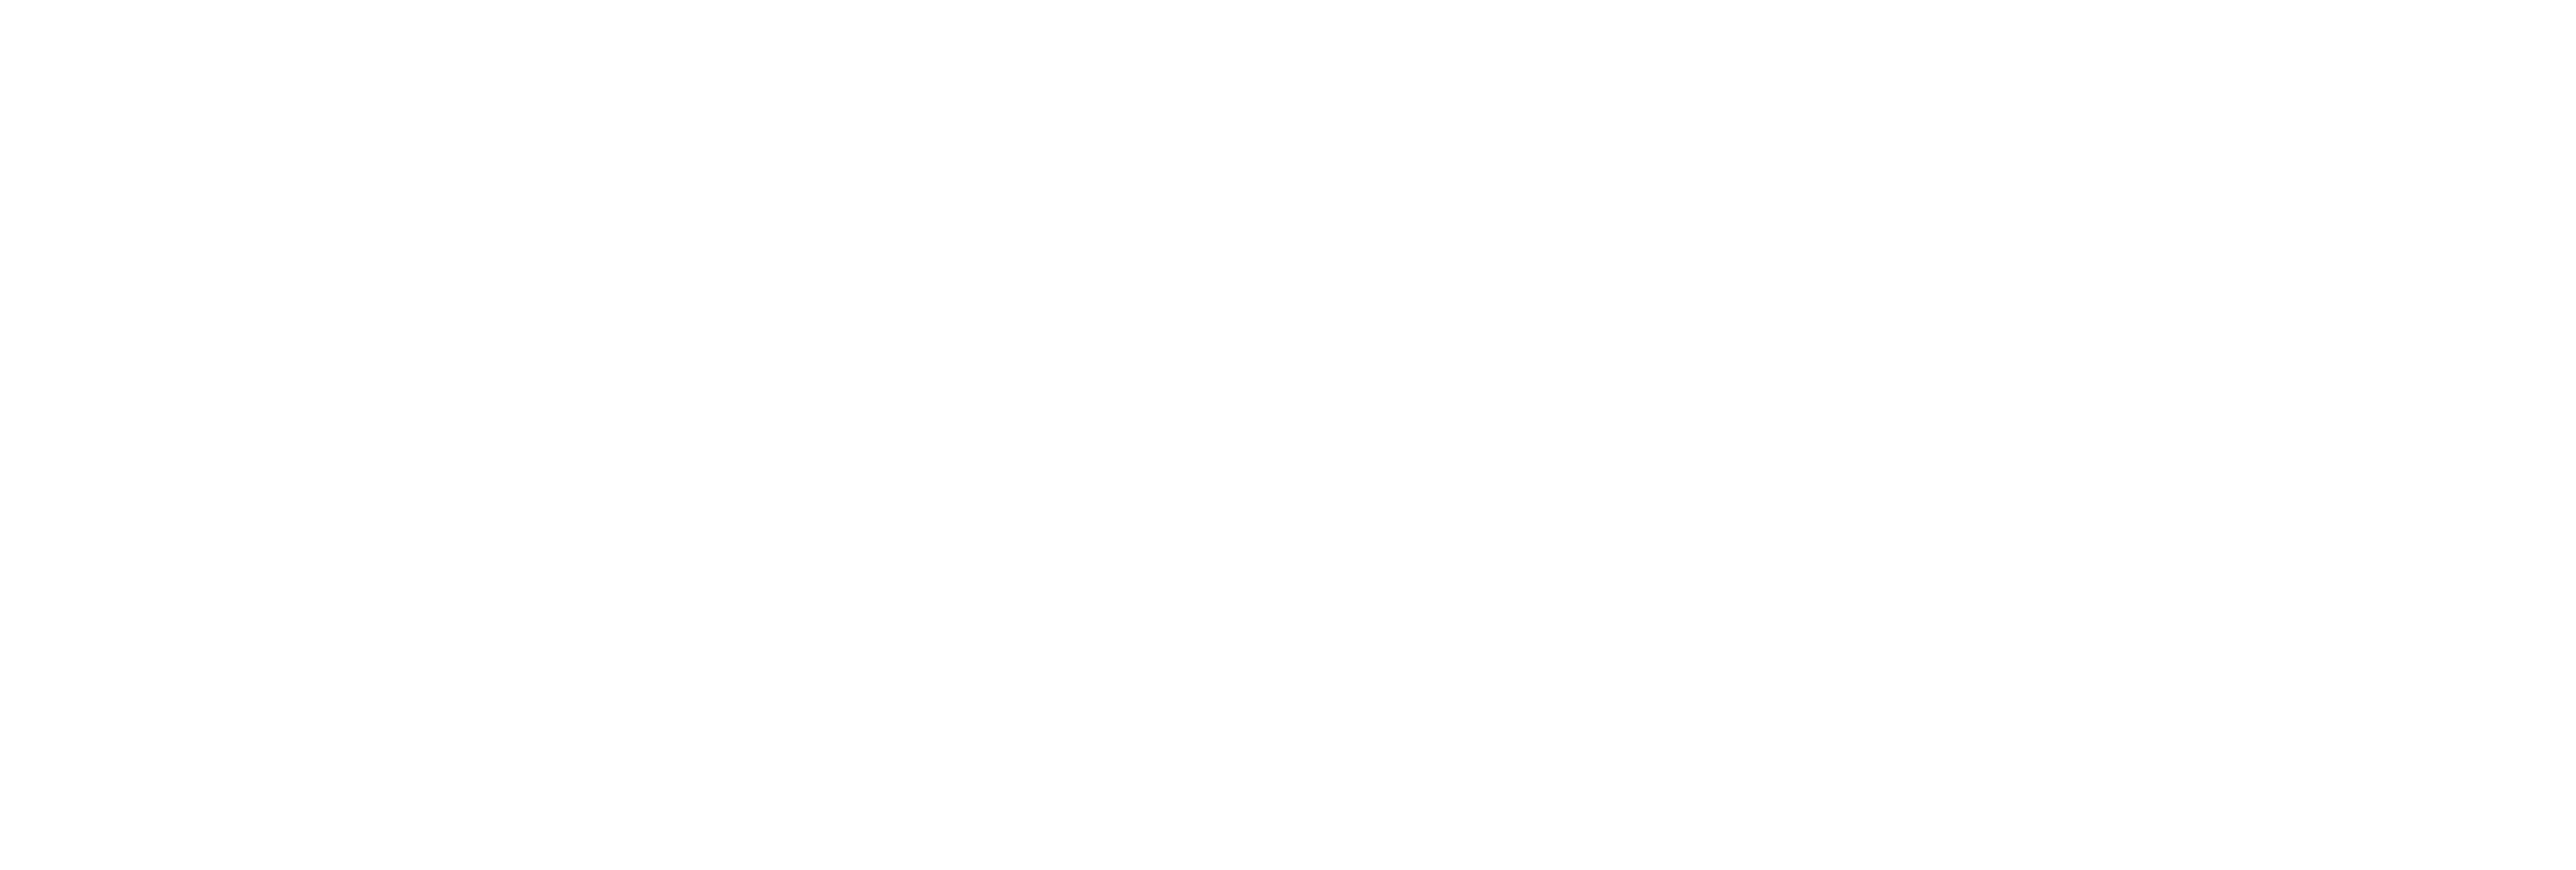 AniCura Albeitar Hospital Veterinario logo